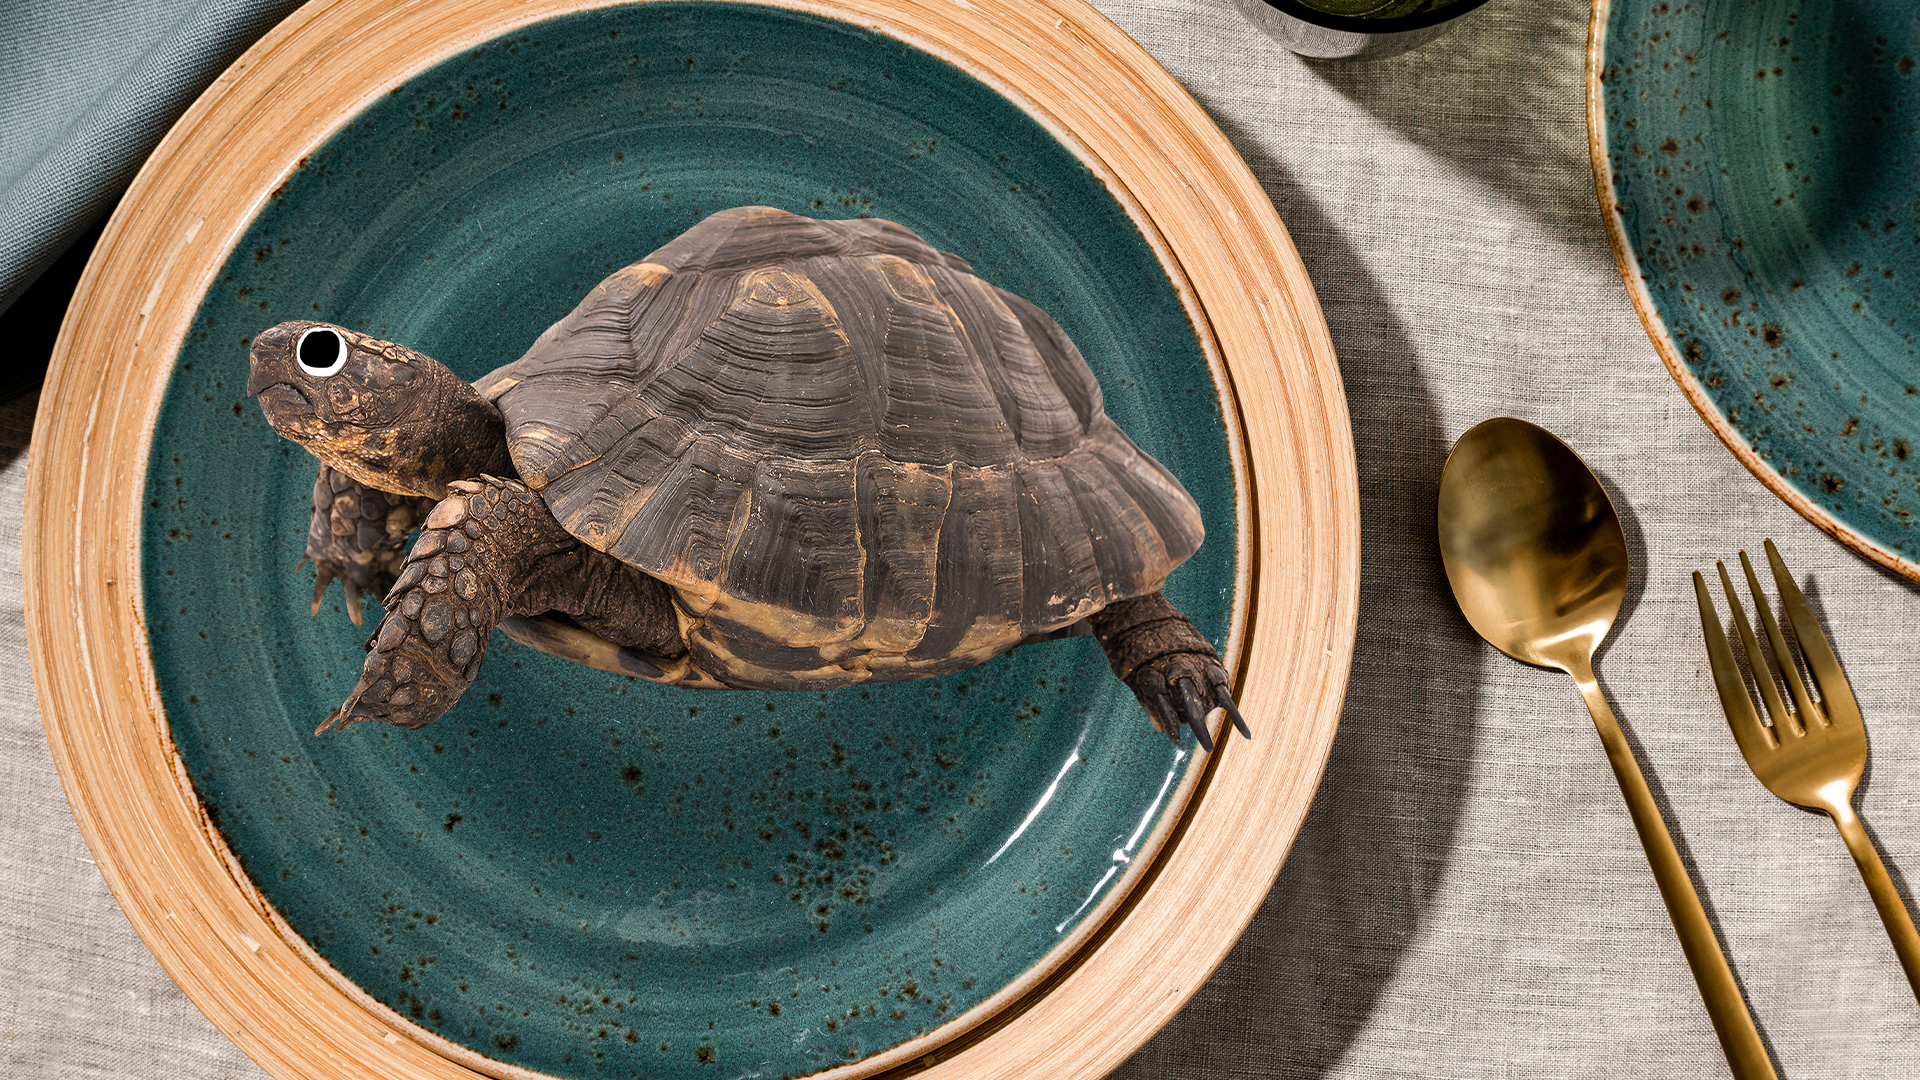 Beano tortoise on a plate